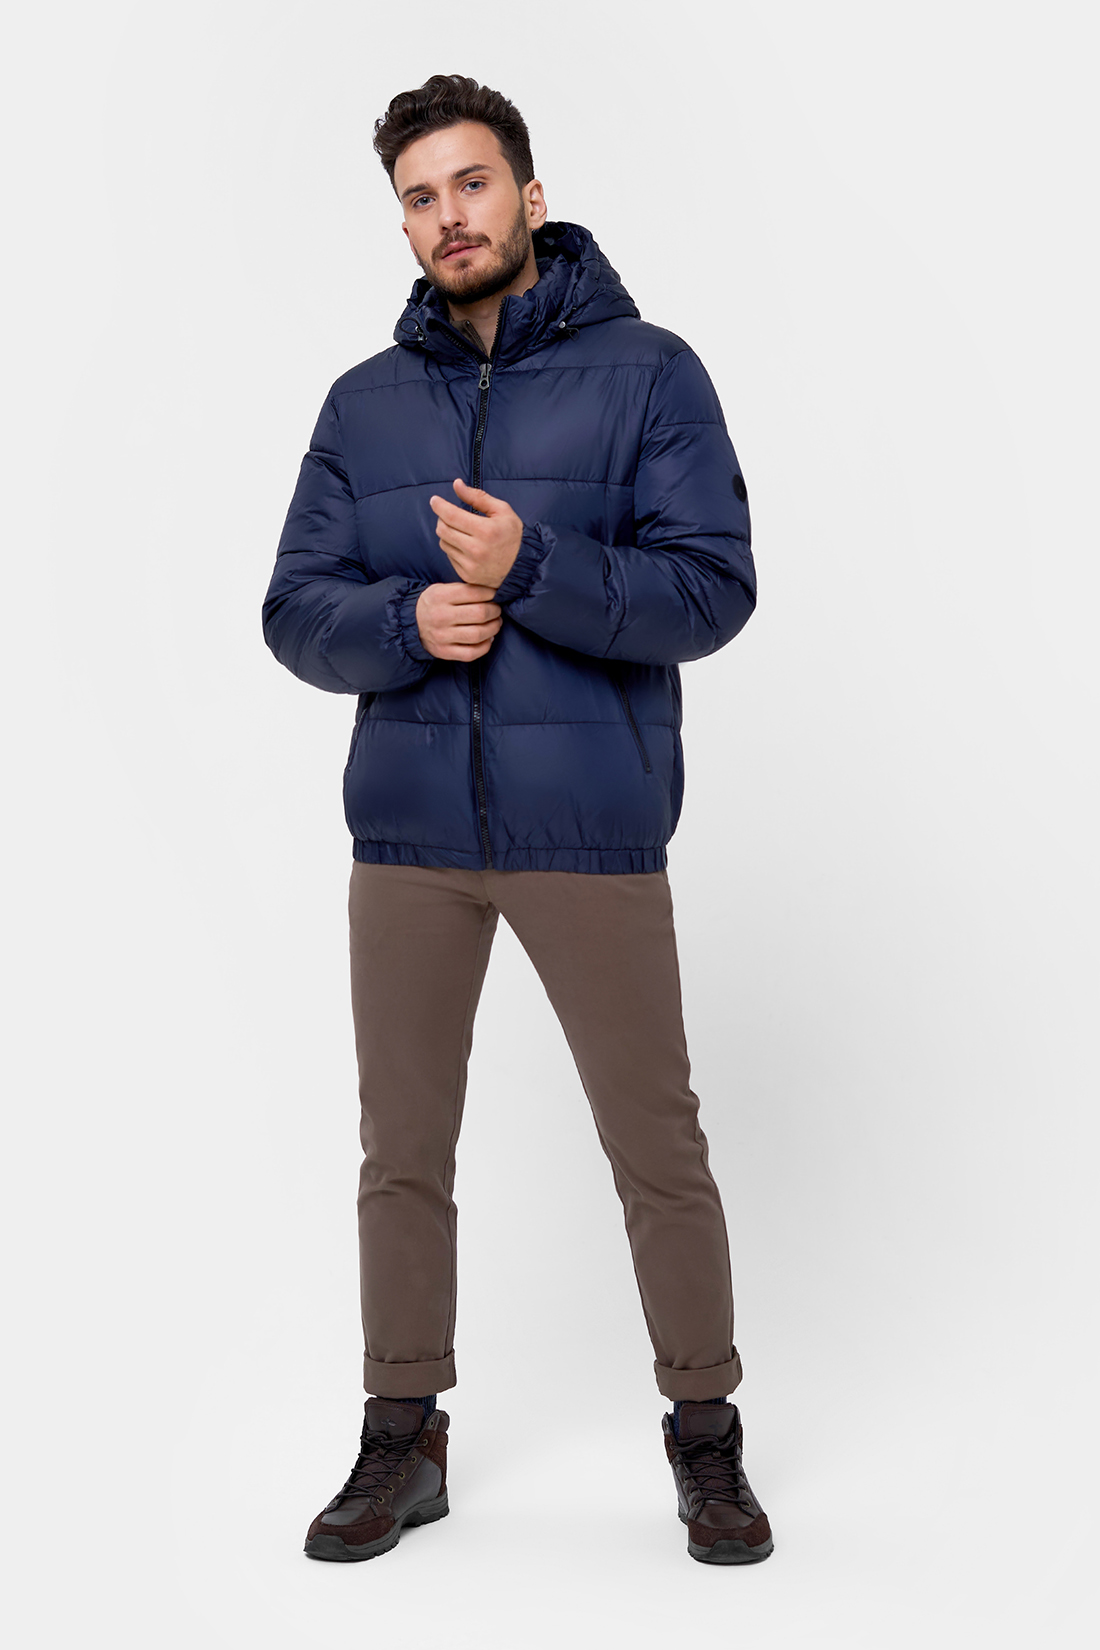 Куртка (Эко пух) (арт. baon B540503), размер S, цвет синий Куртка (Эко пух) (арт. baon B540503) - фото 5